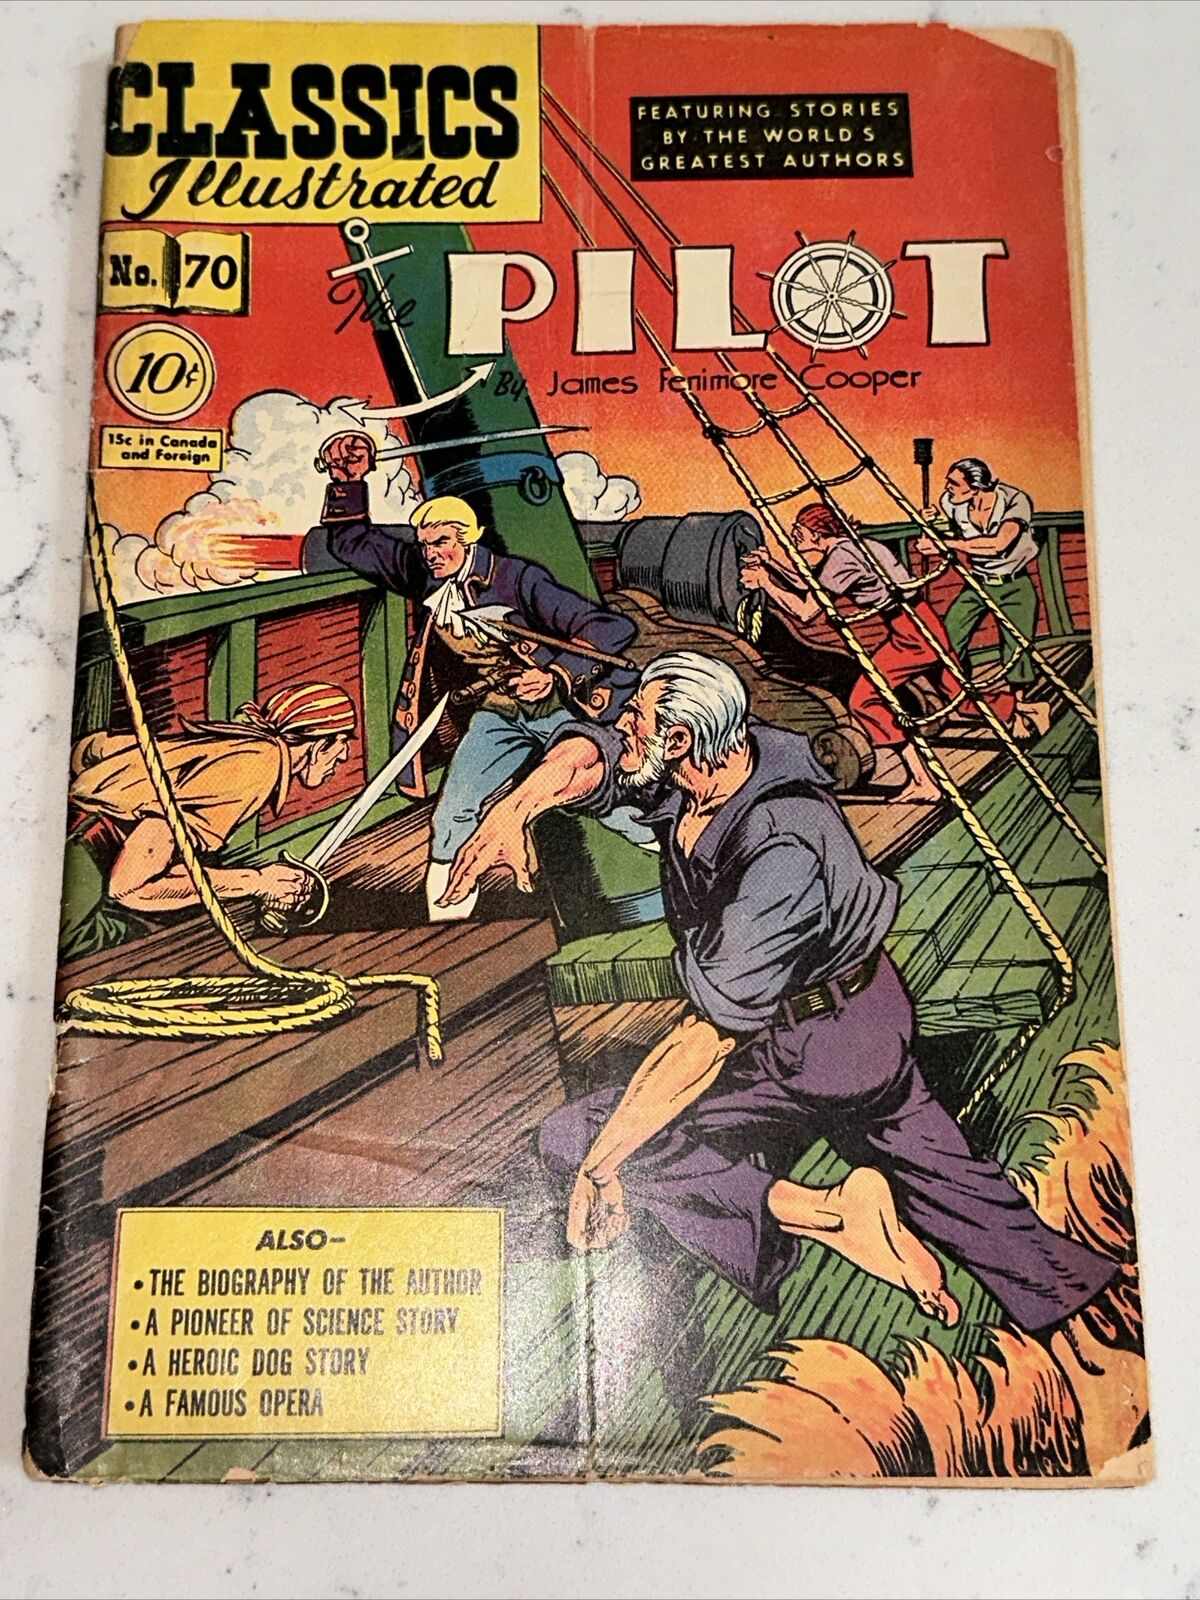 The Pilot Classics Illustrated #70